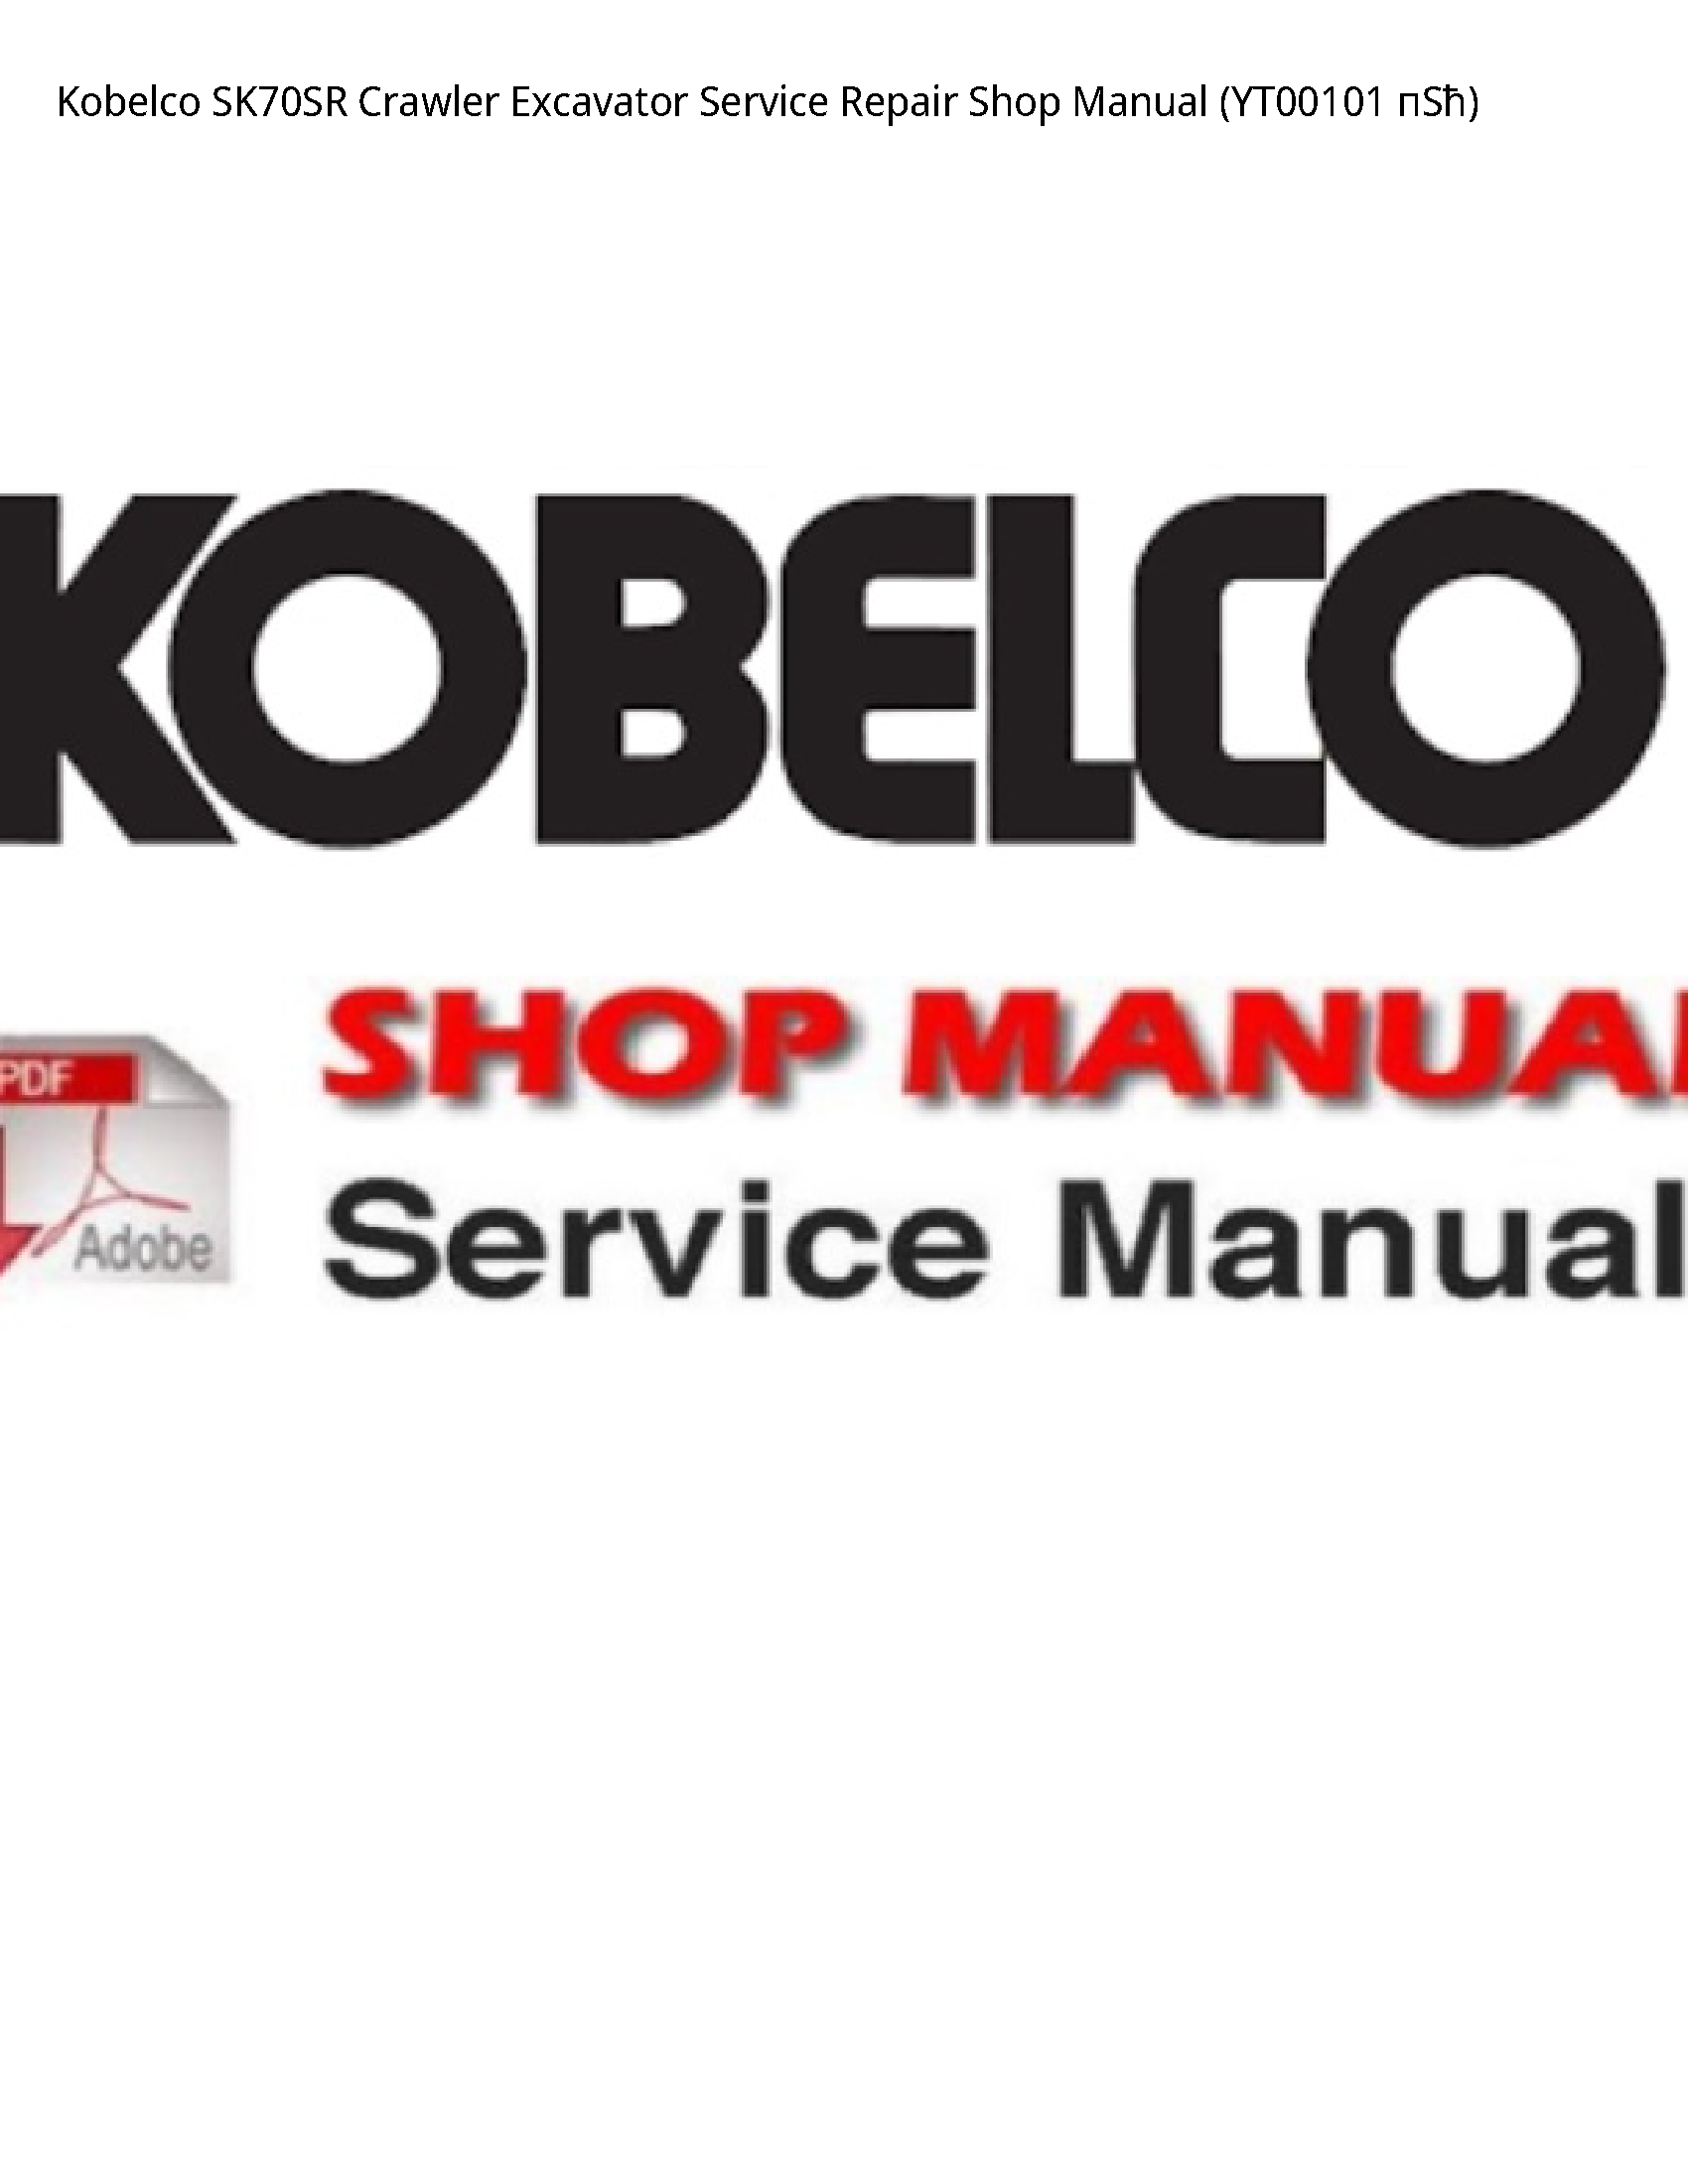 Kobelco SK70SR Crawler Excavator manual